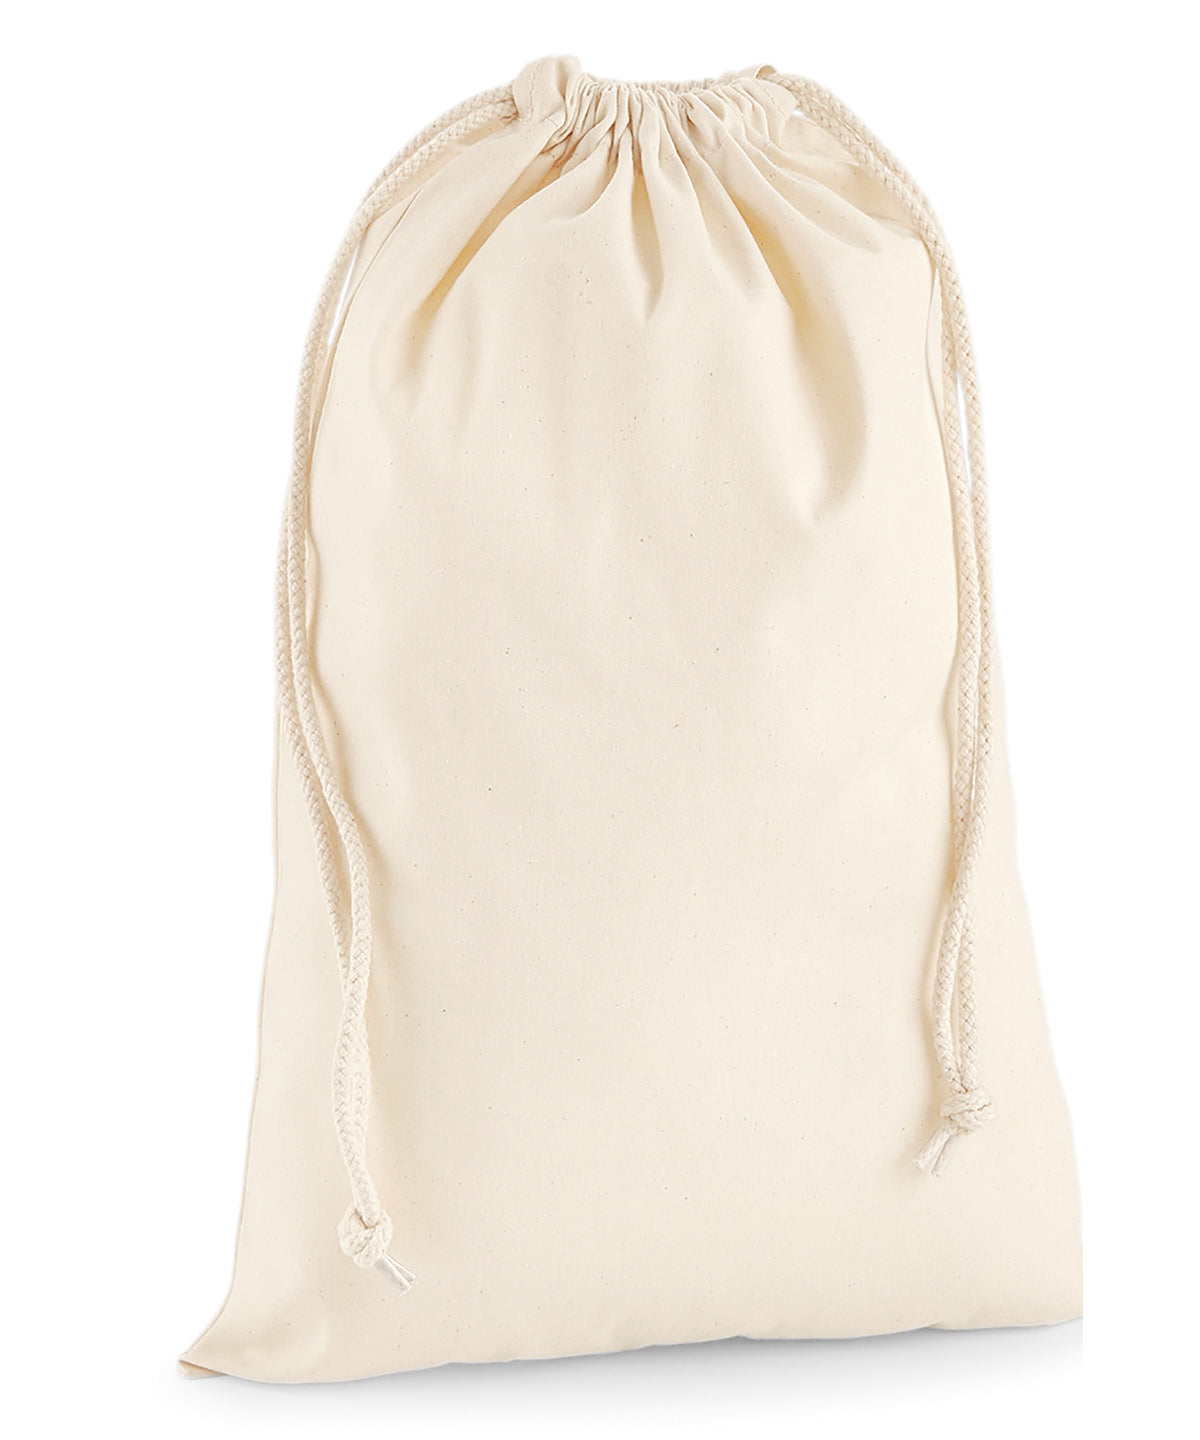 Töskur - Premium Cotton Stuff Bag